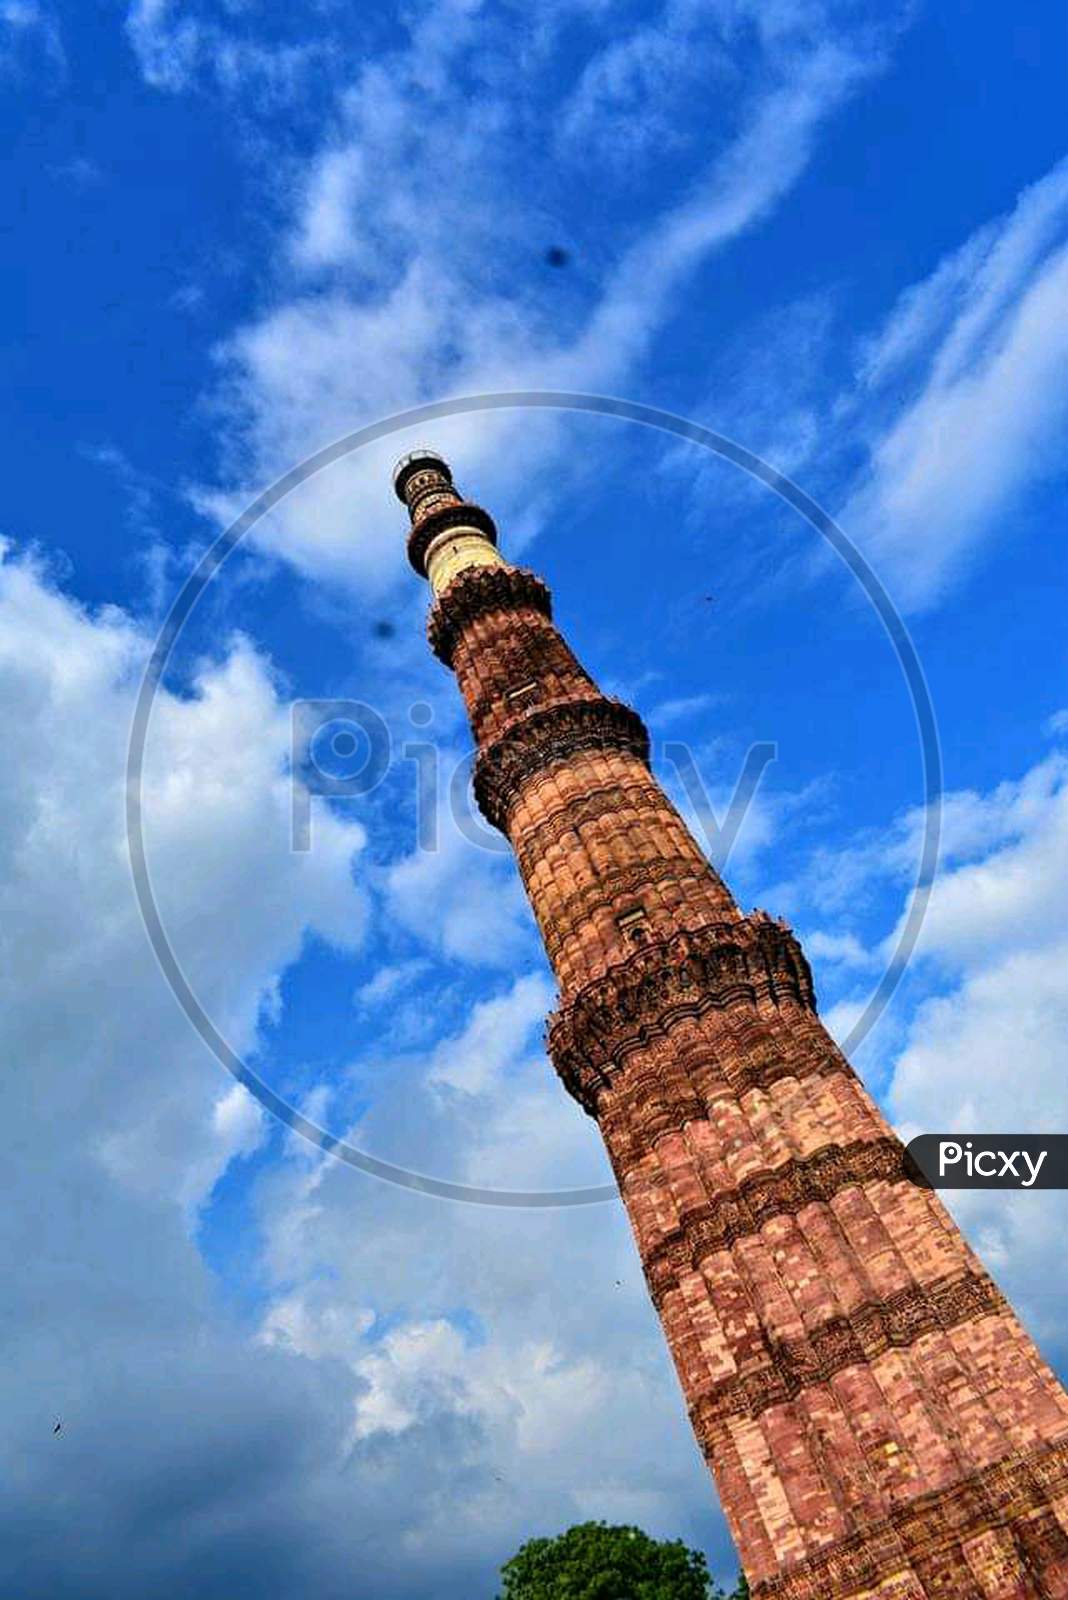 The Most beautiful Ancient Ashoka pillar